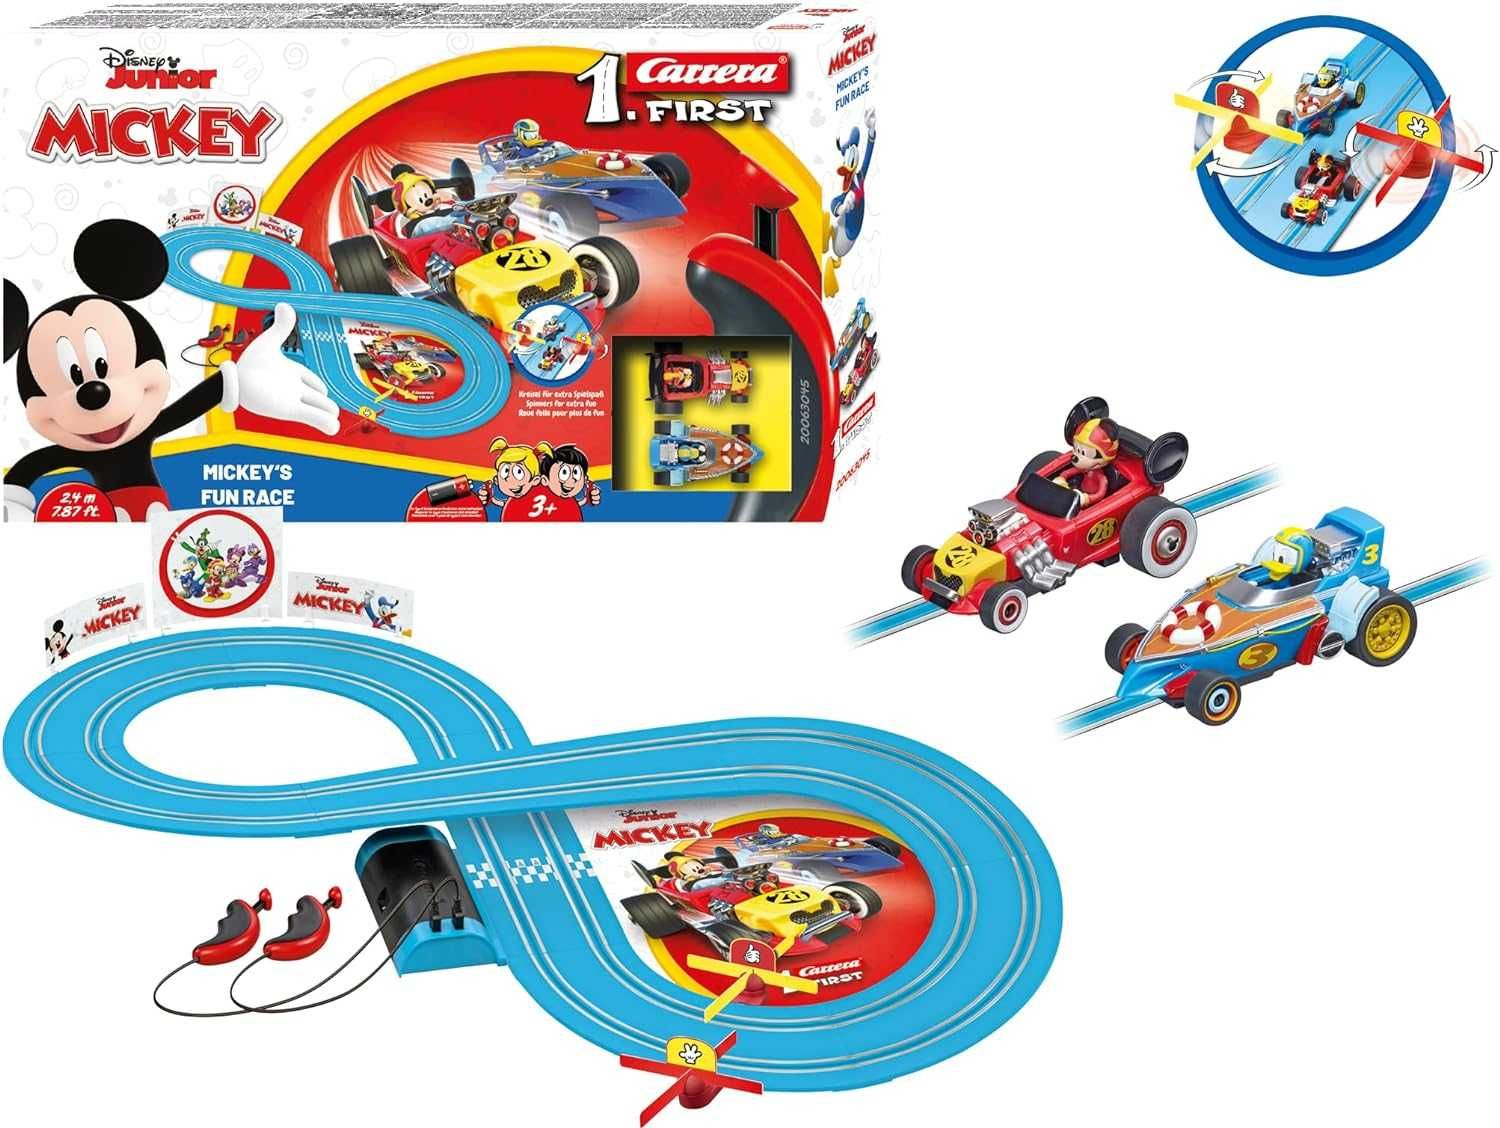 Carrera FIRST Mickey's Fun Race - състезателна писта за слот коли